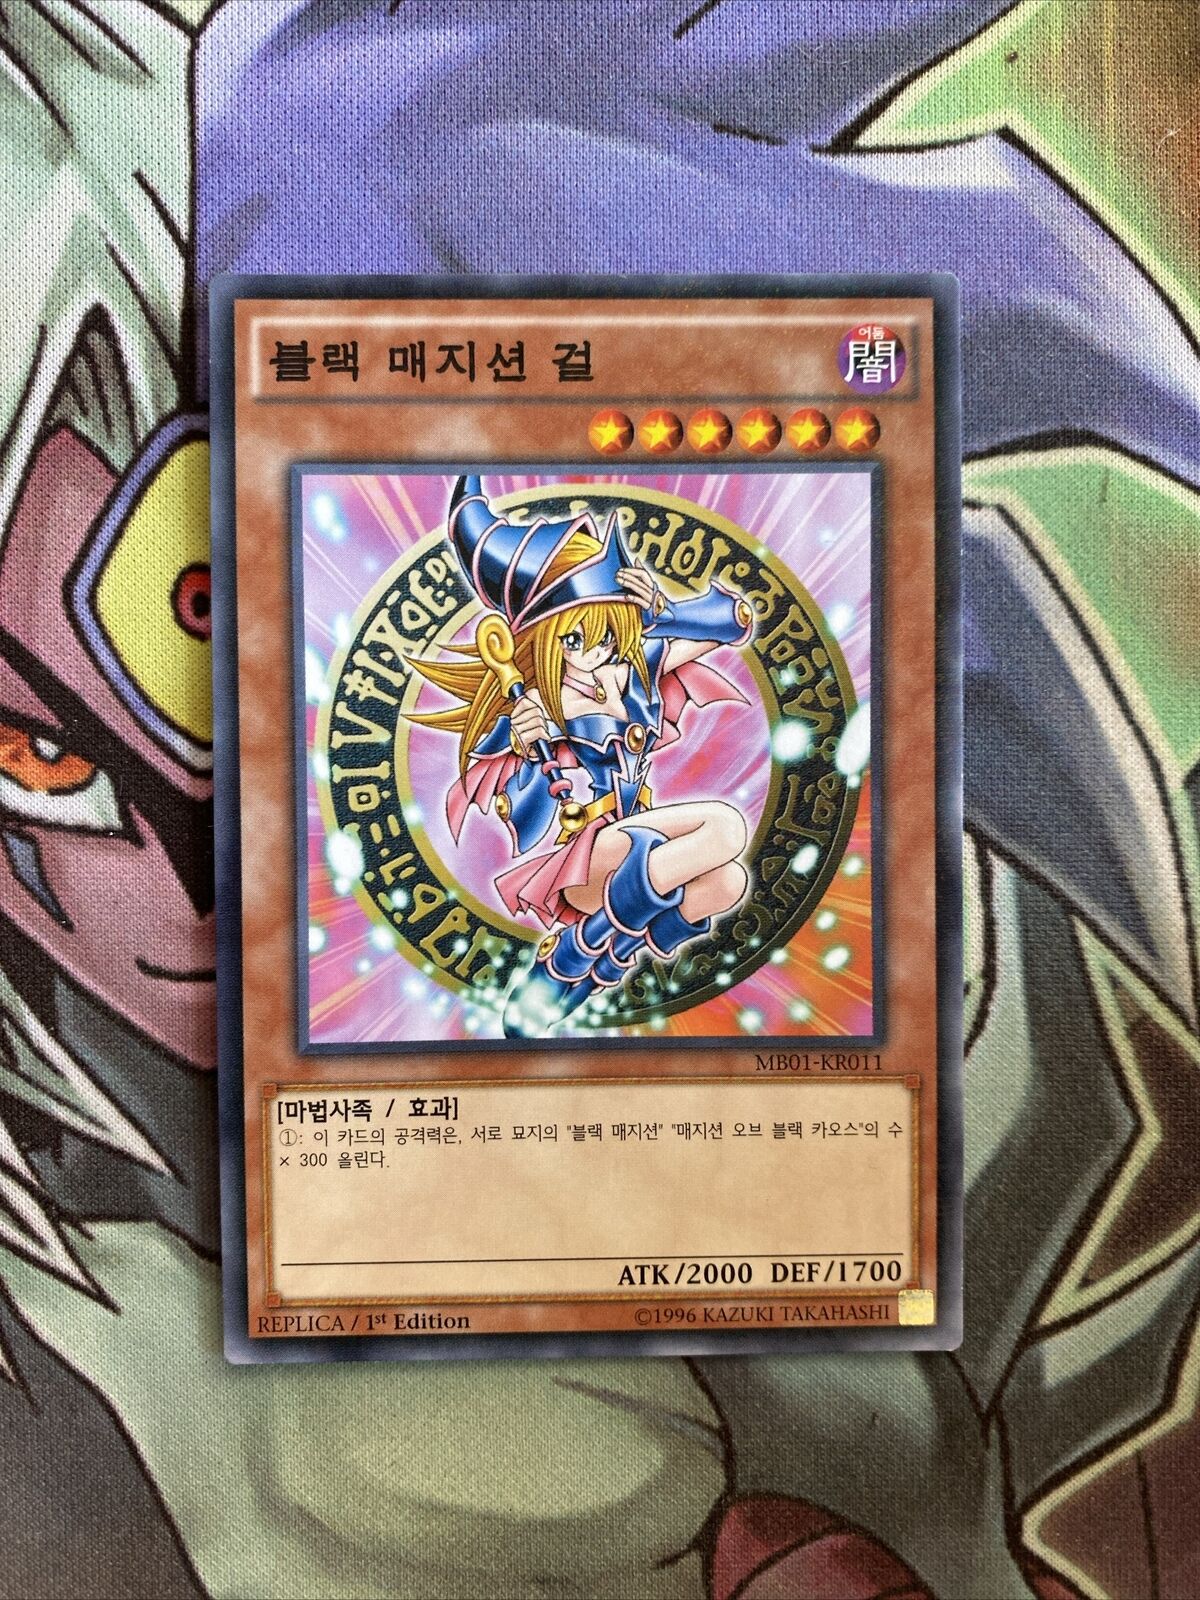 MB01-KR011 Dark Magician Girl Millenium Rare Unlimited Edition NM Yugioh Card